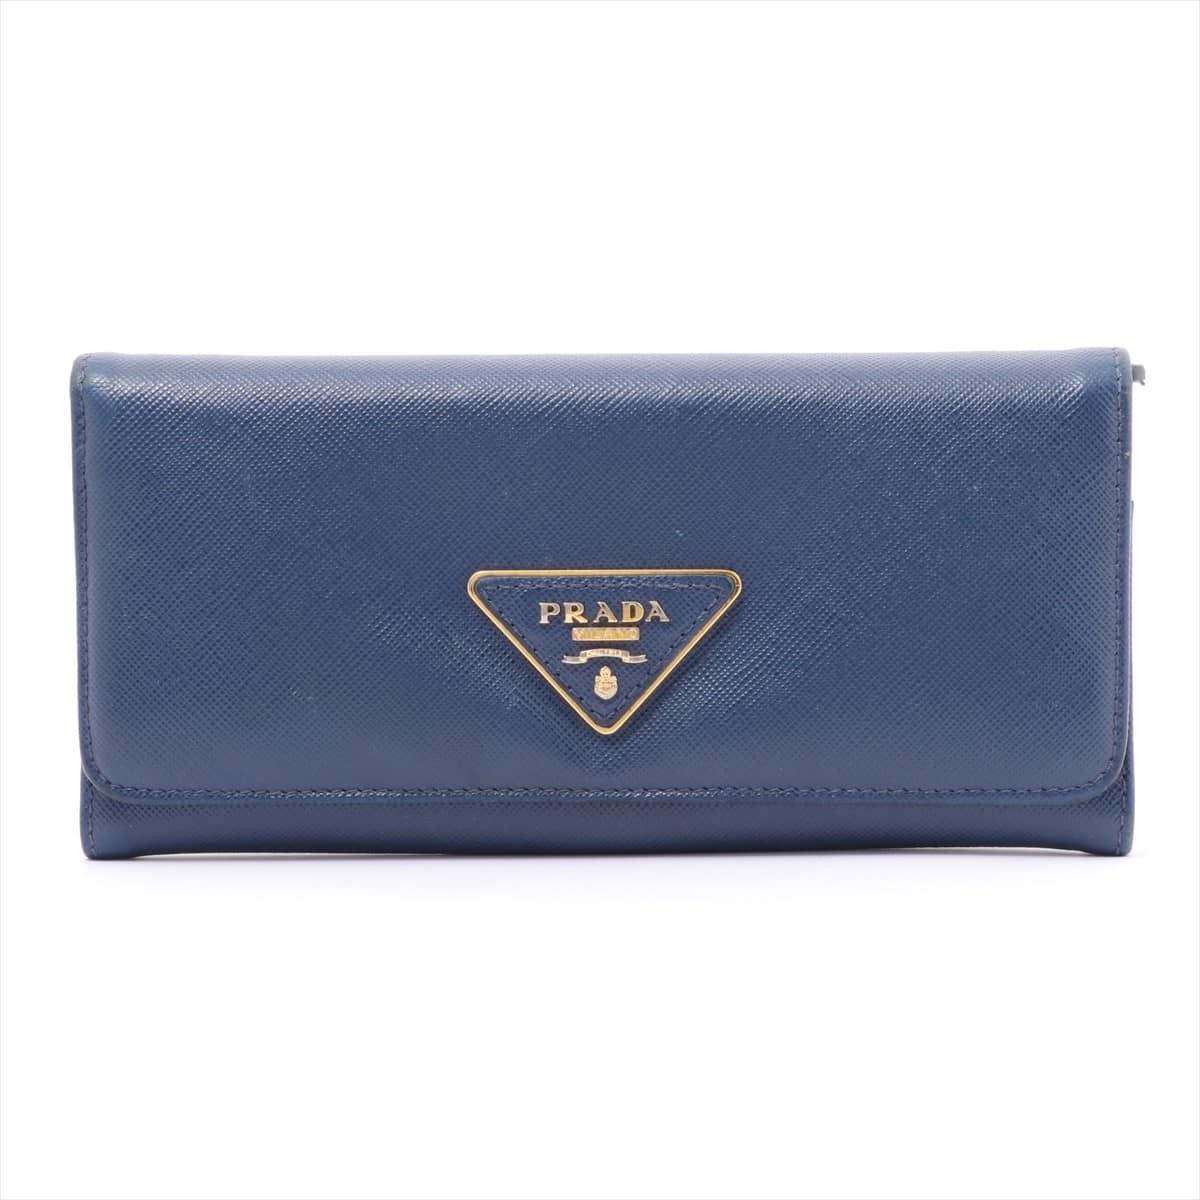 Prada Saffiano 1M1132 Leather Wallet Blue